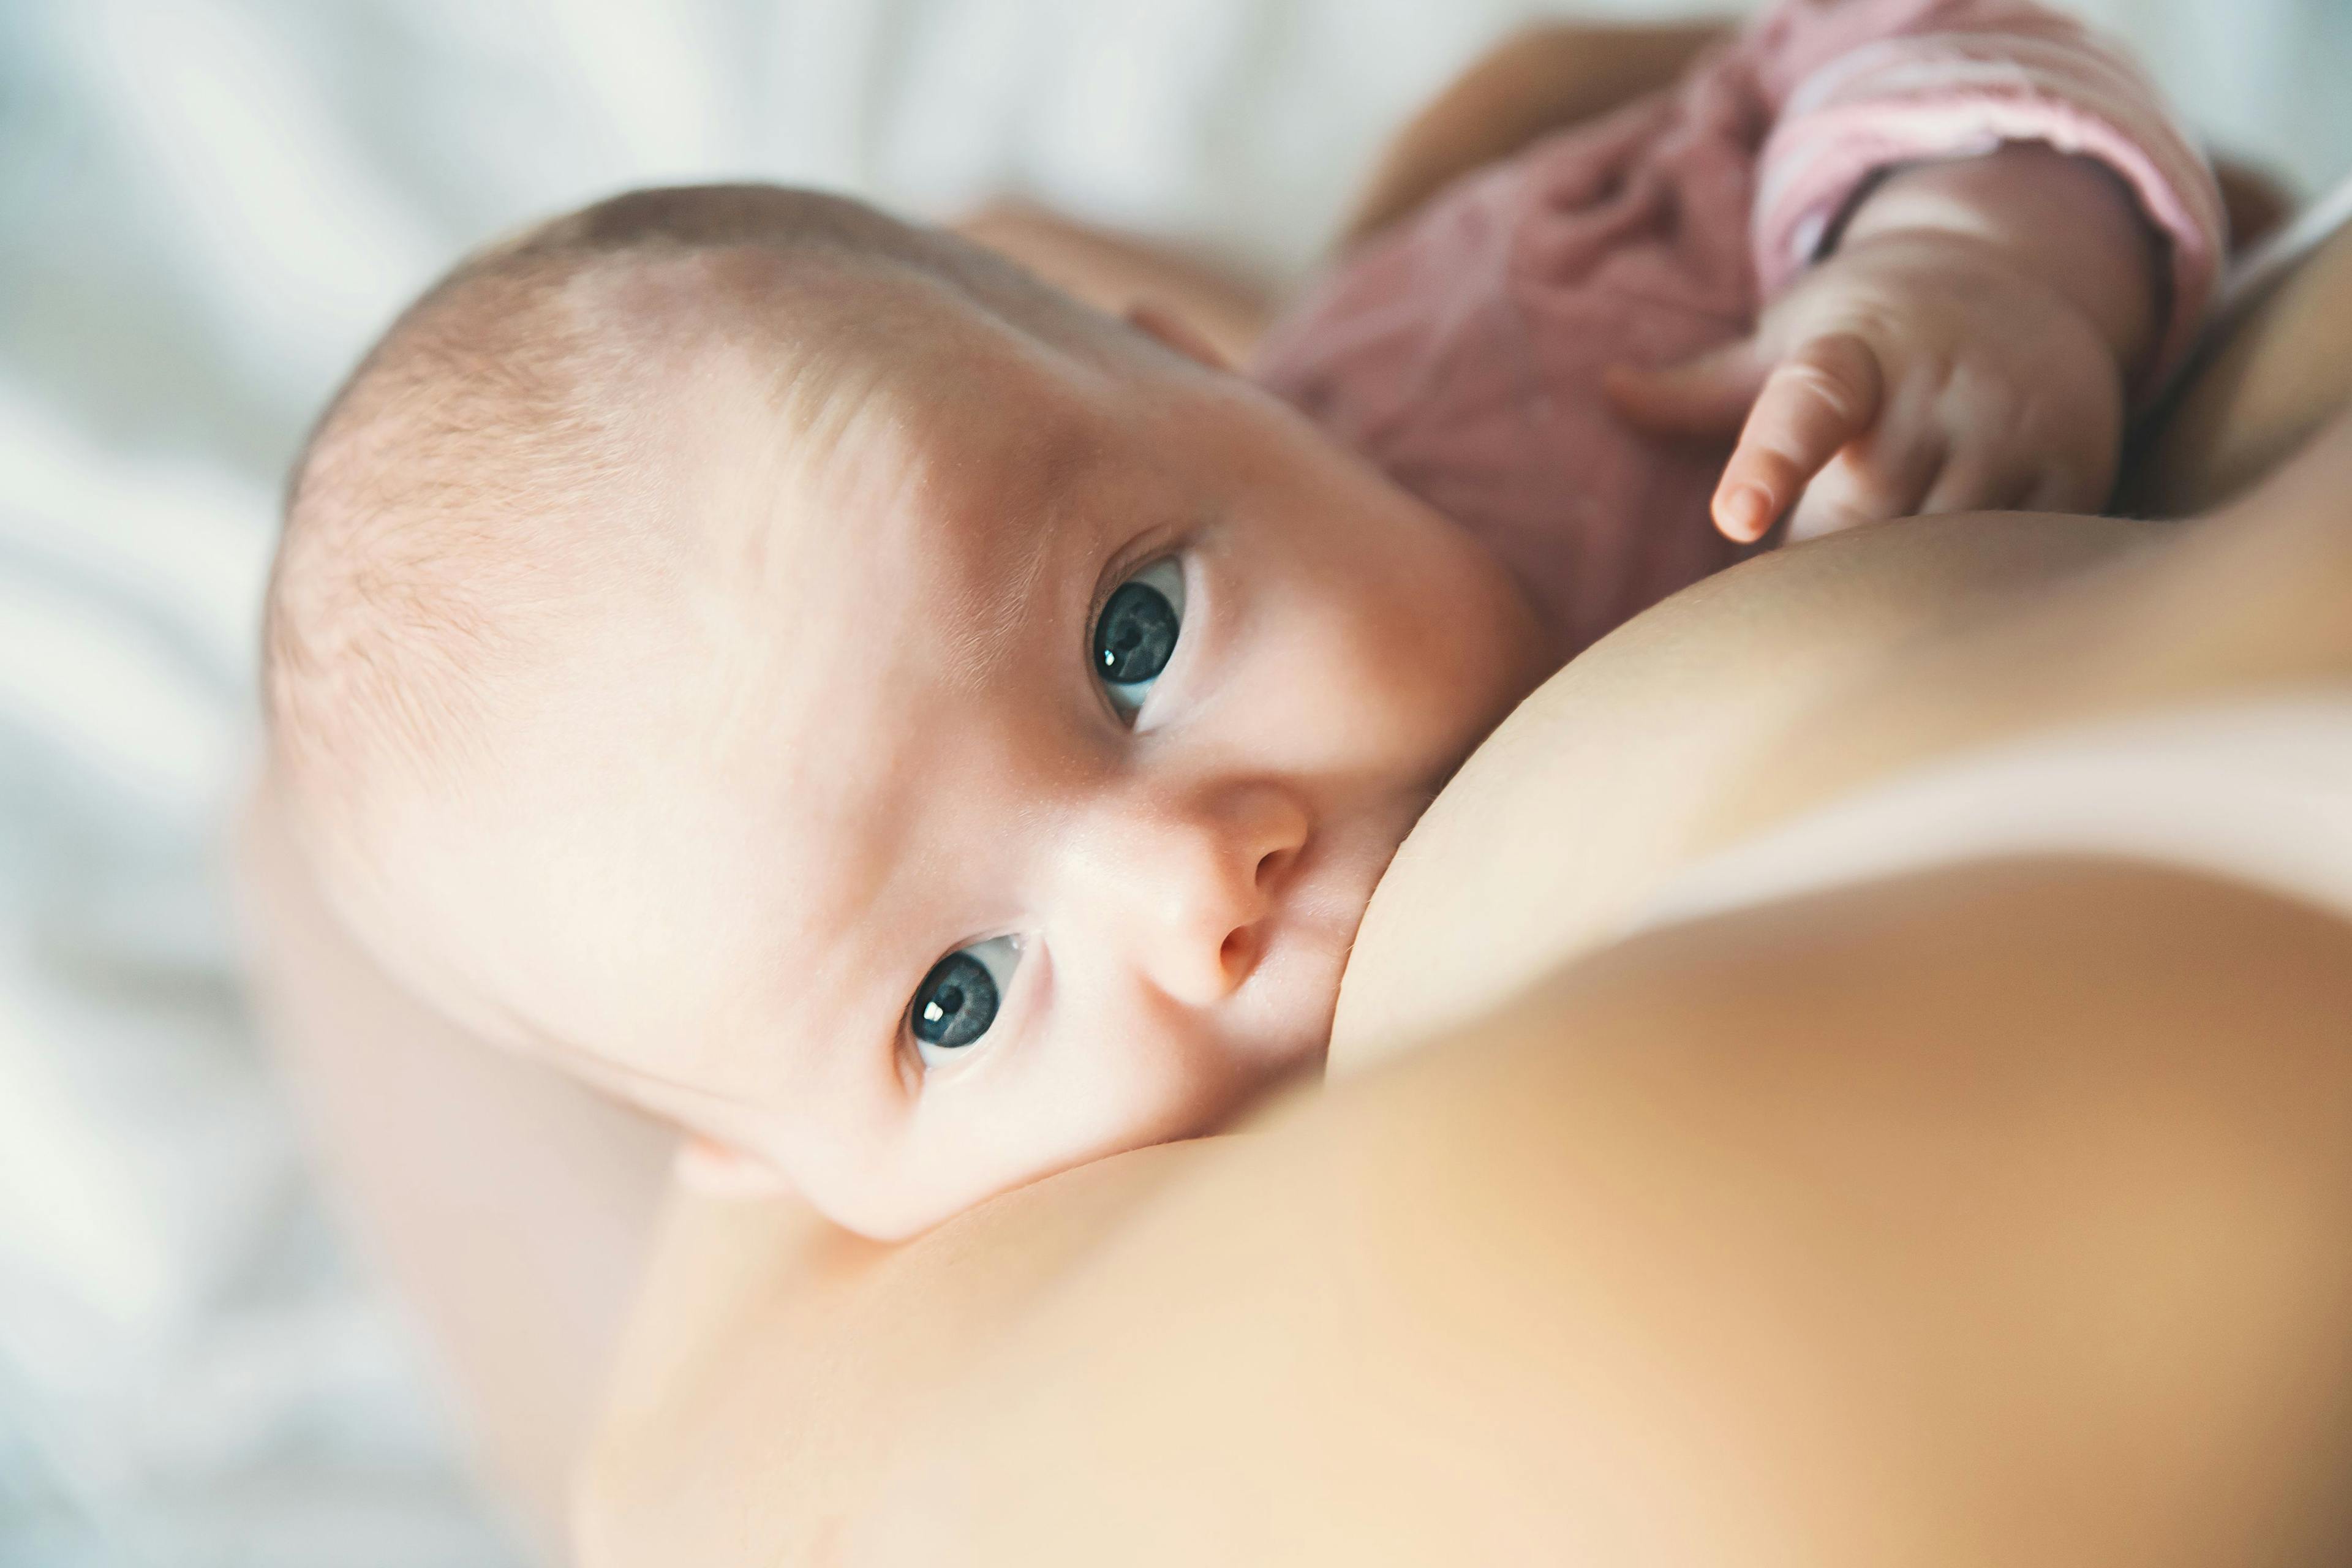 Mothers with high BMI less likely to breastfeed © nataliaderiabina - stock.adobe.com